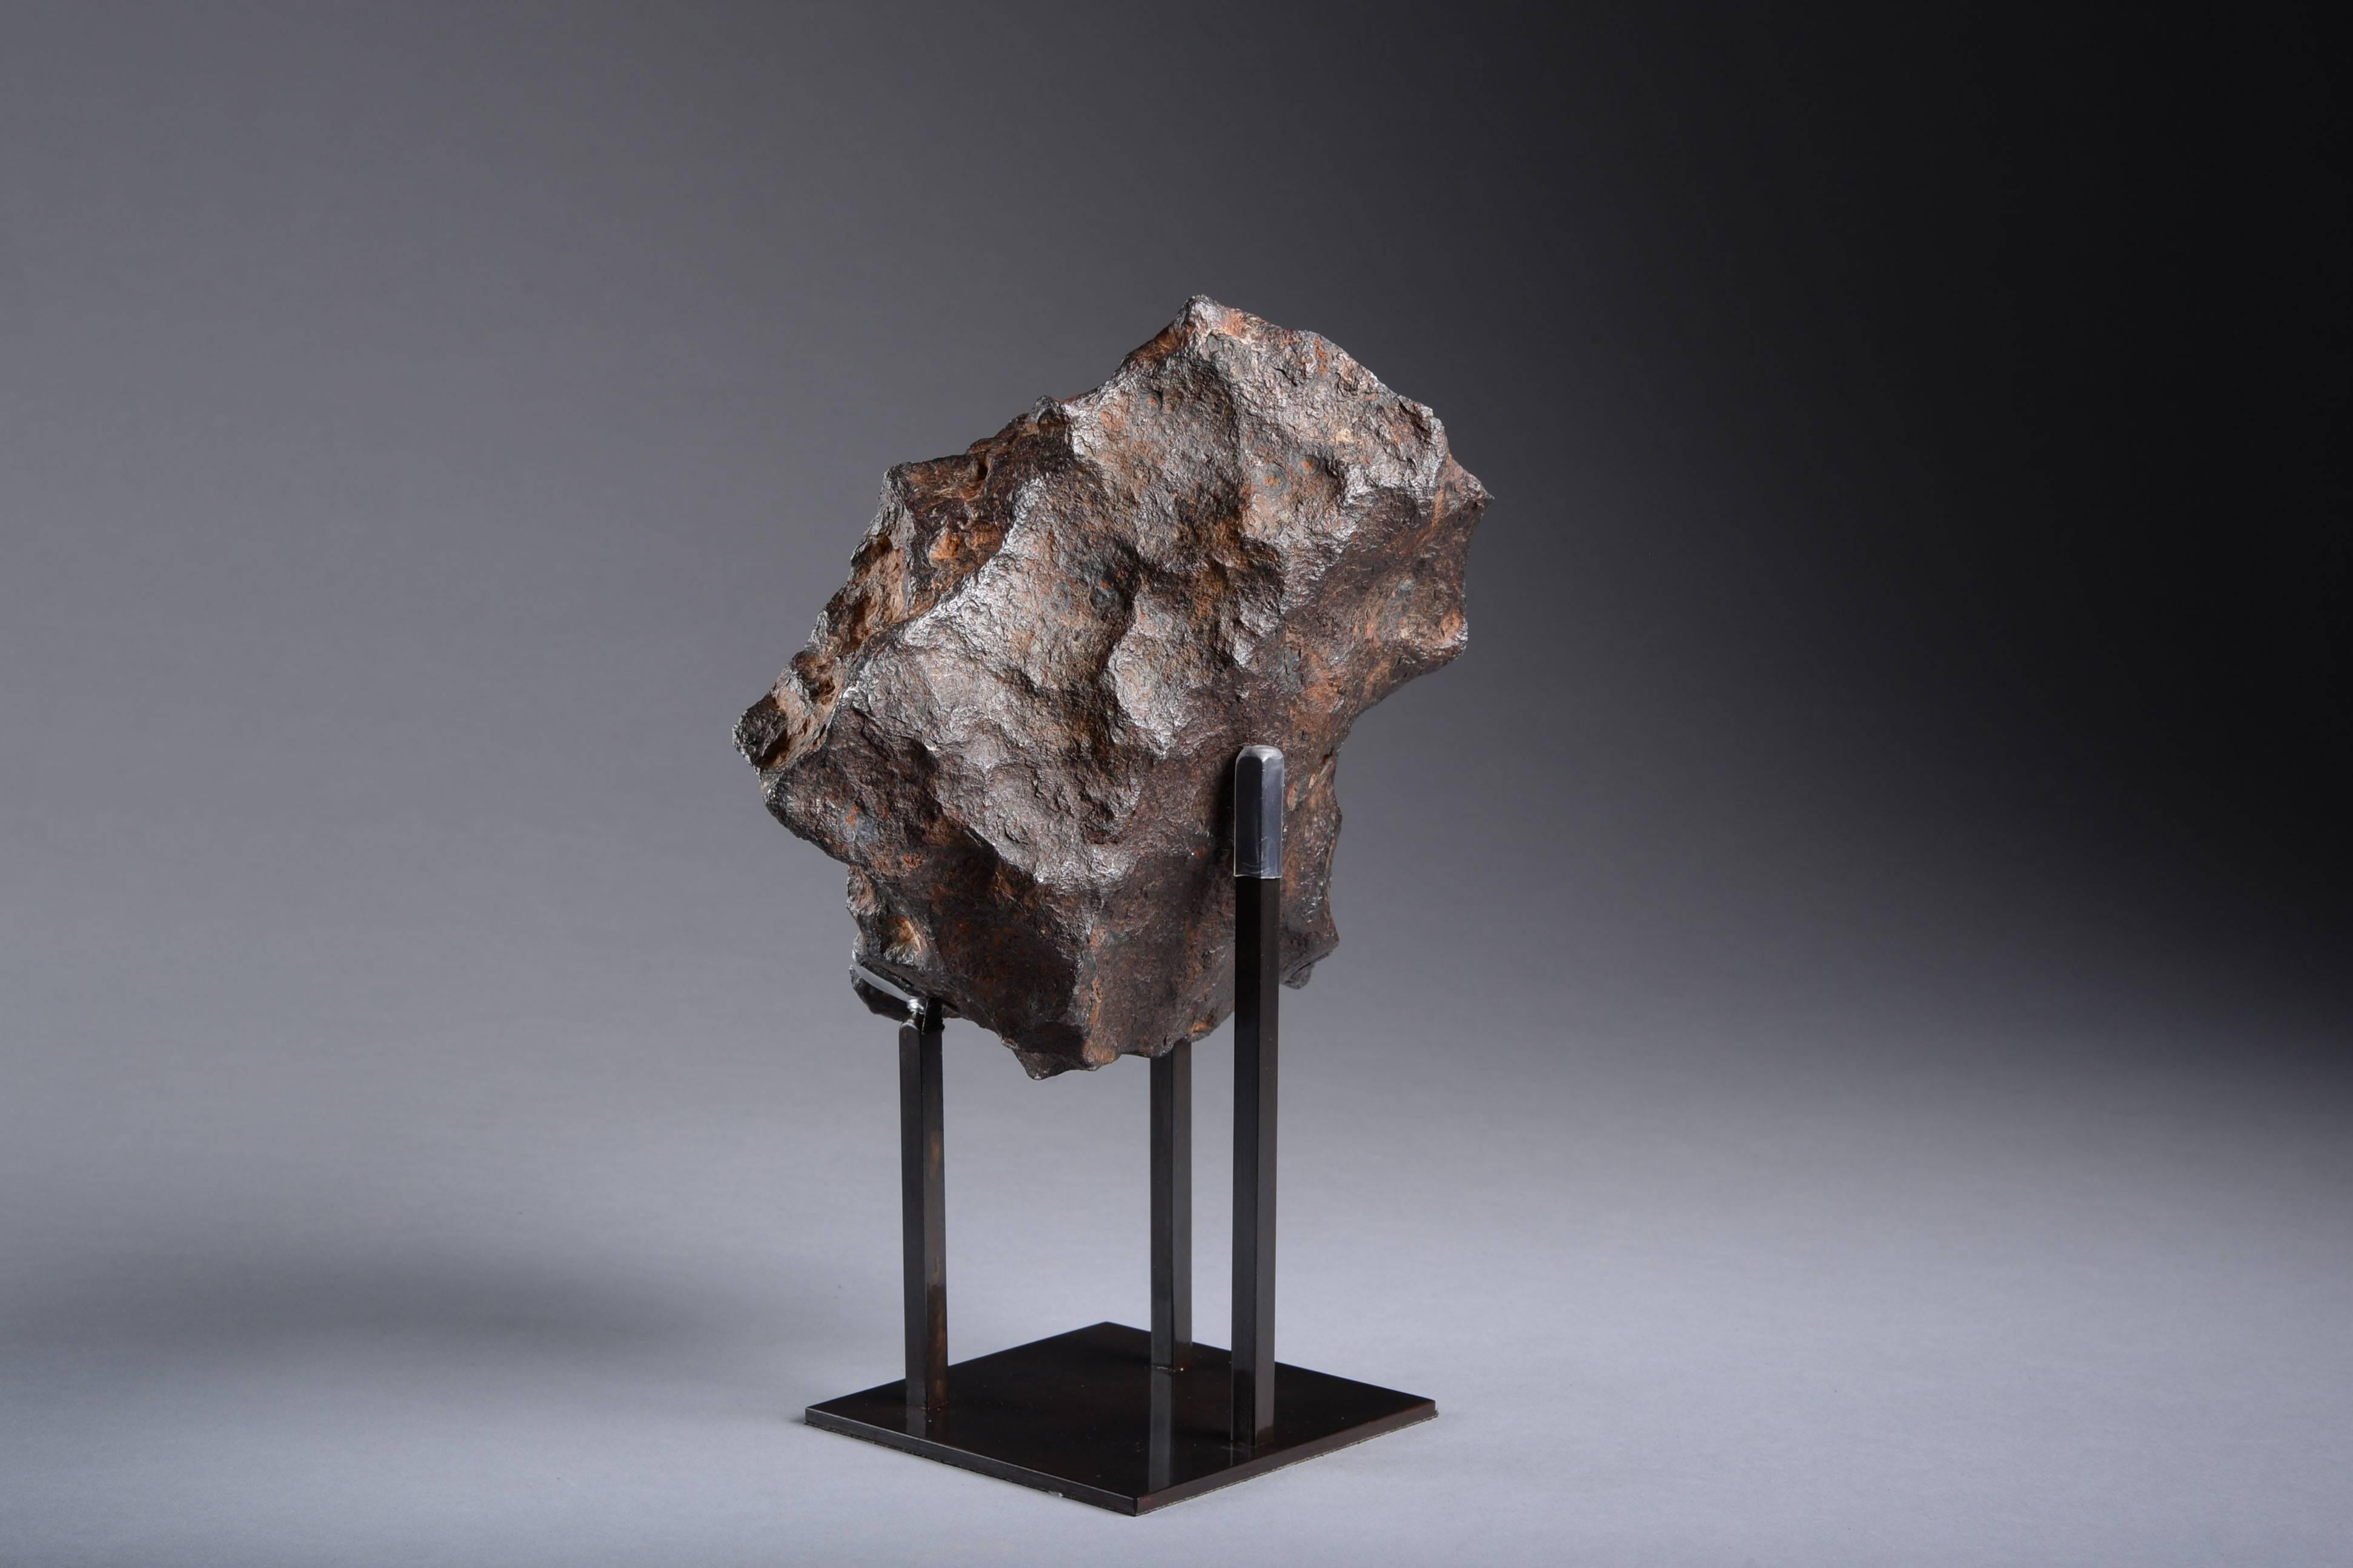 Superb Extra-Terrestrial Abstract Sculpture, Iron Meteorite 2